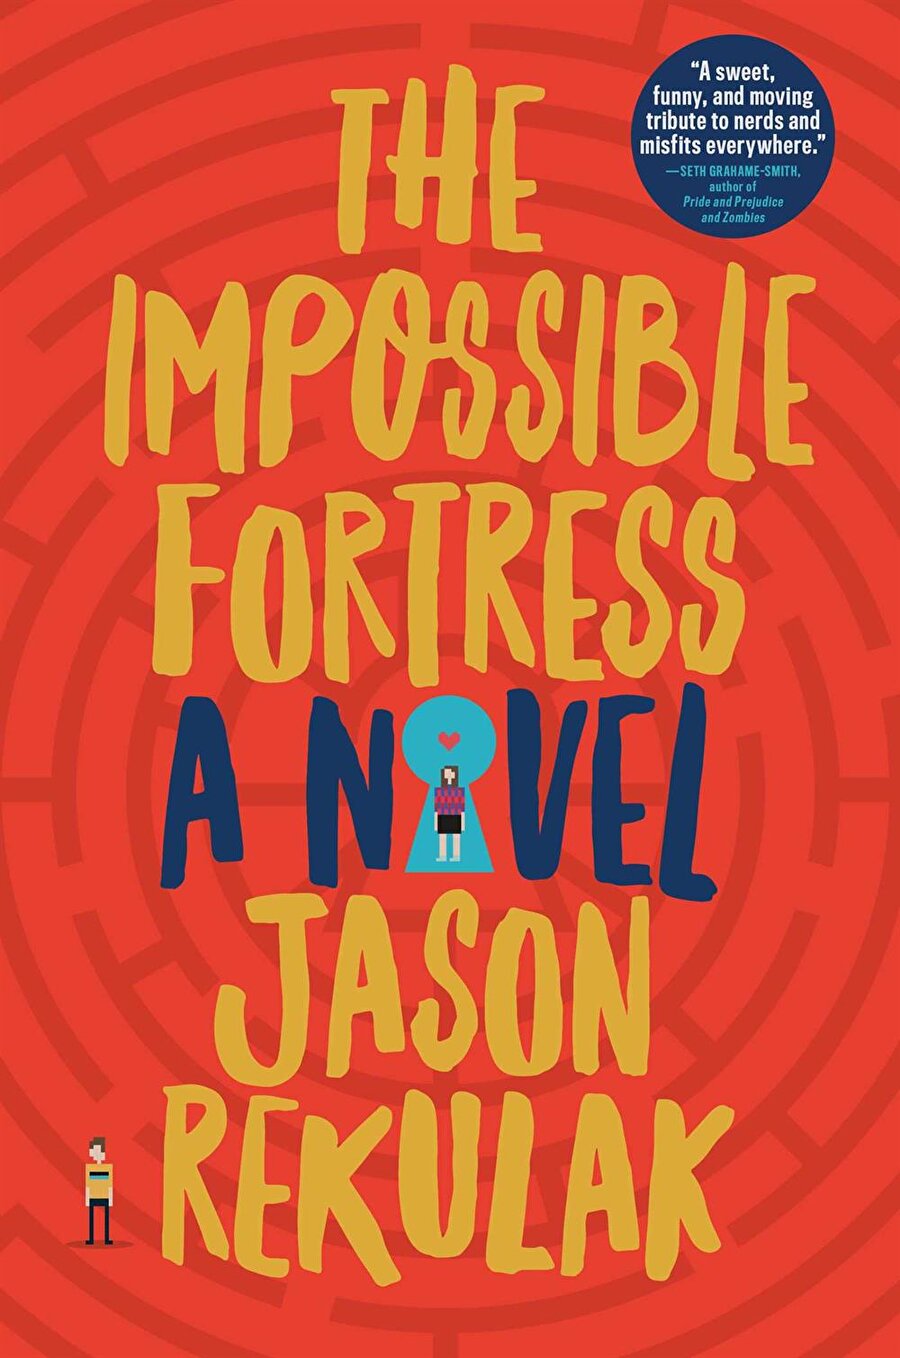 Jason Rekulak
"The Impossible Fortress: A Novel"